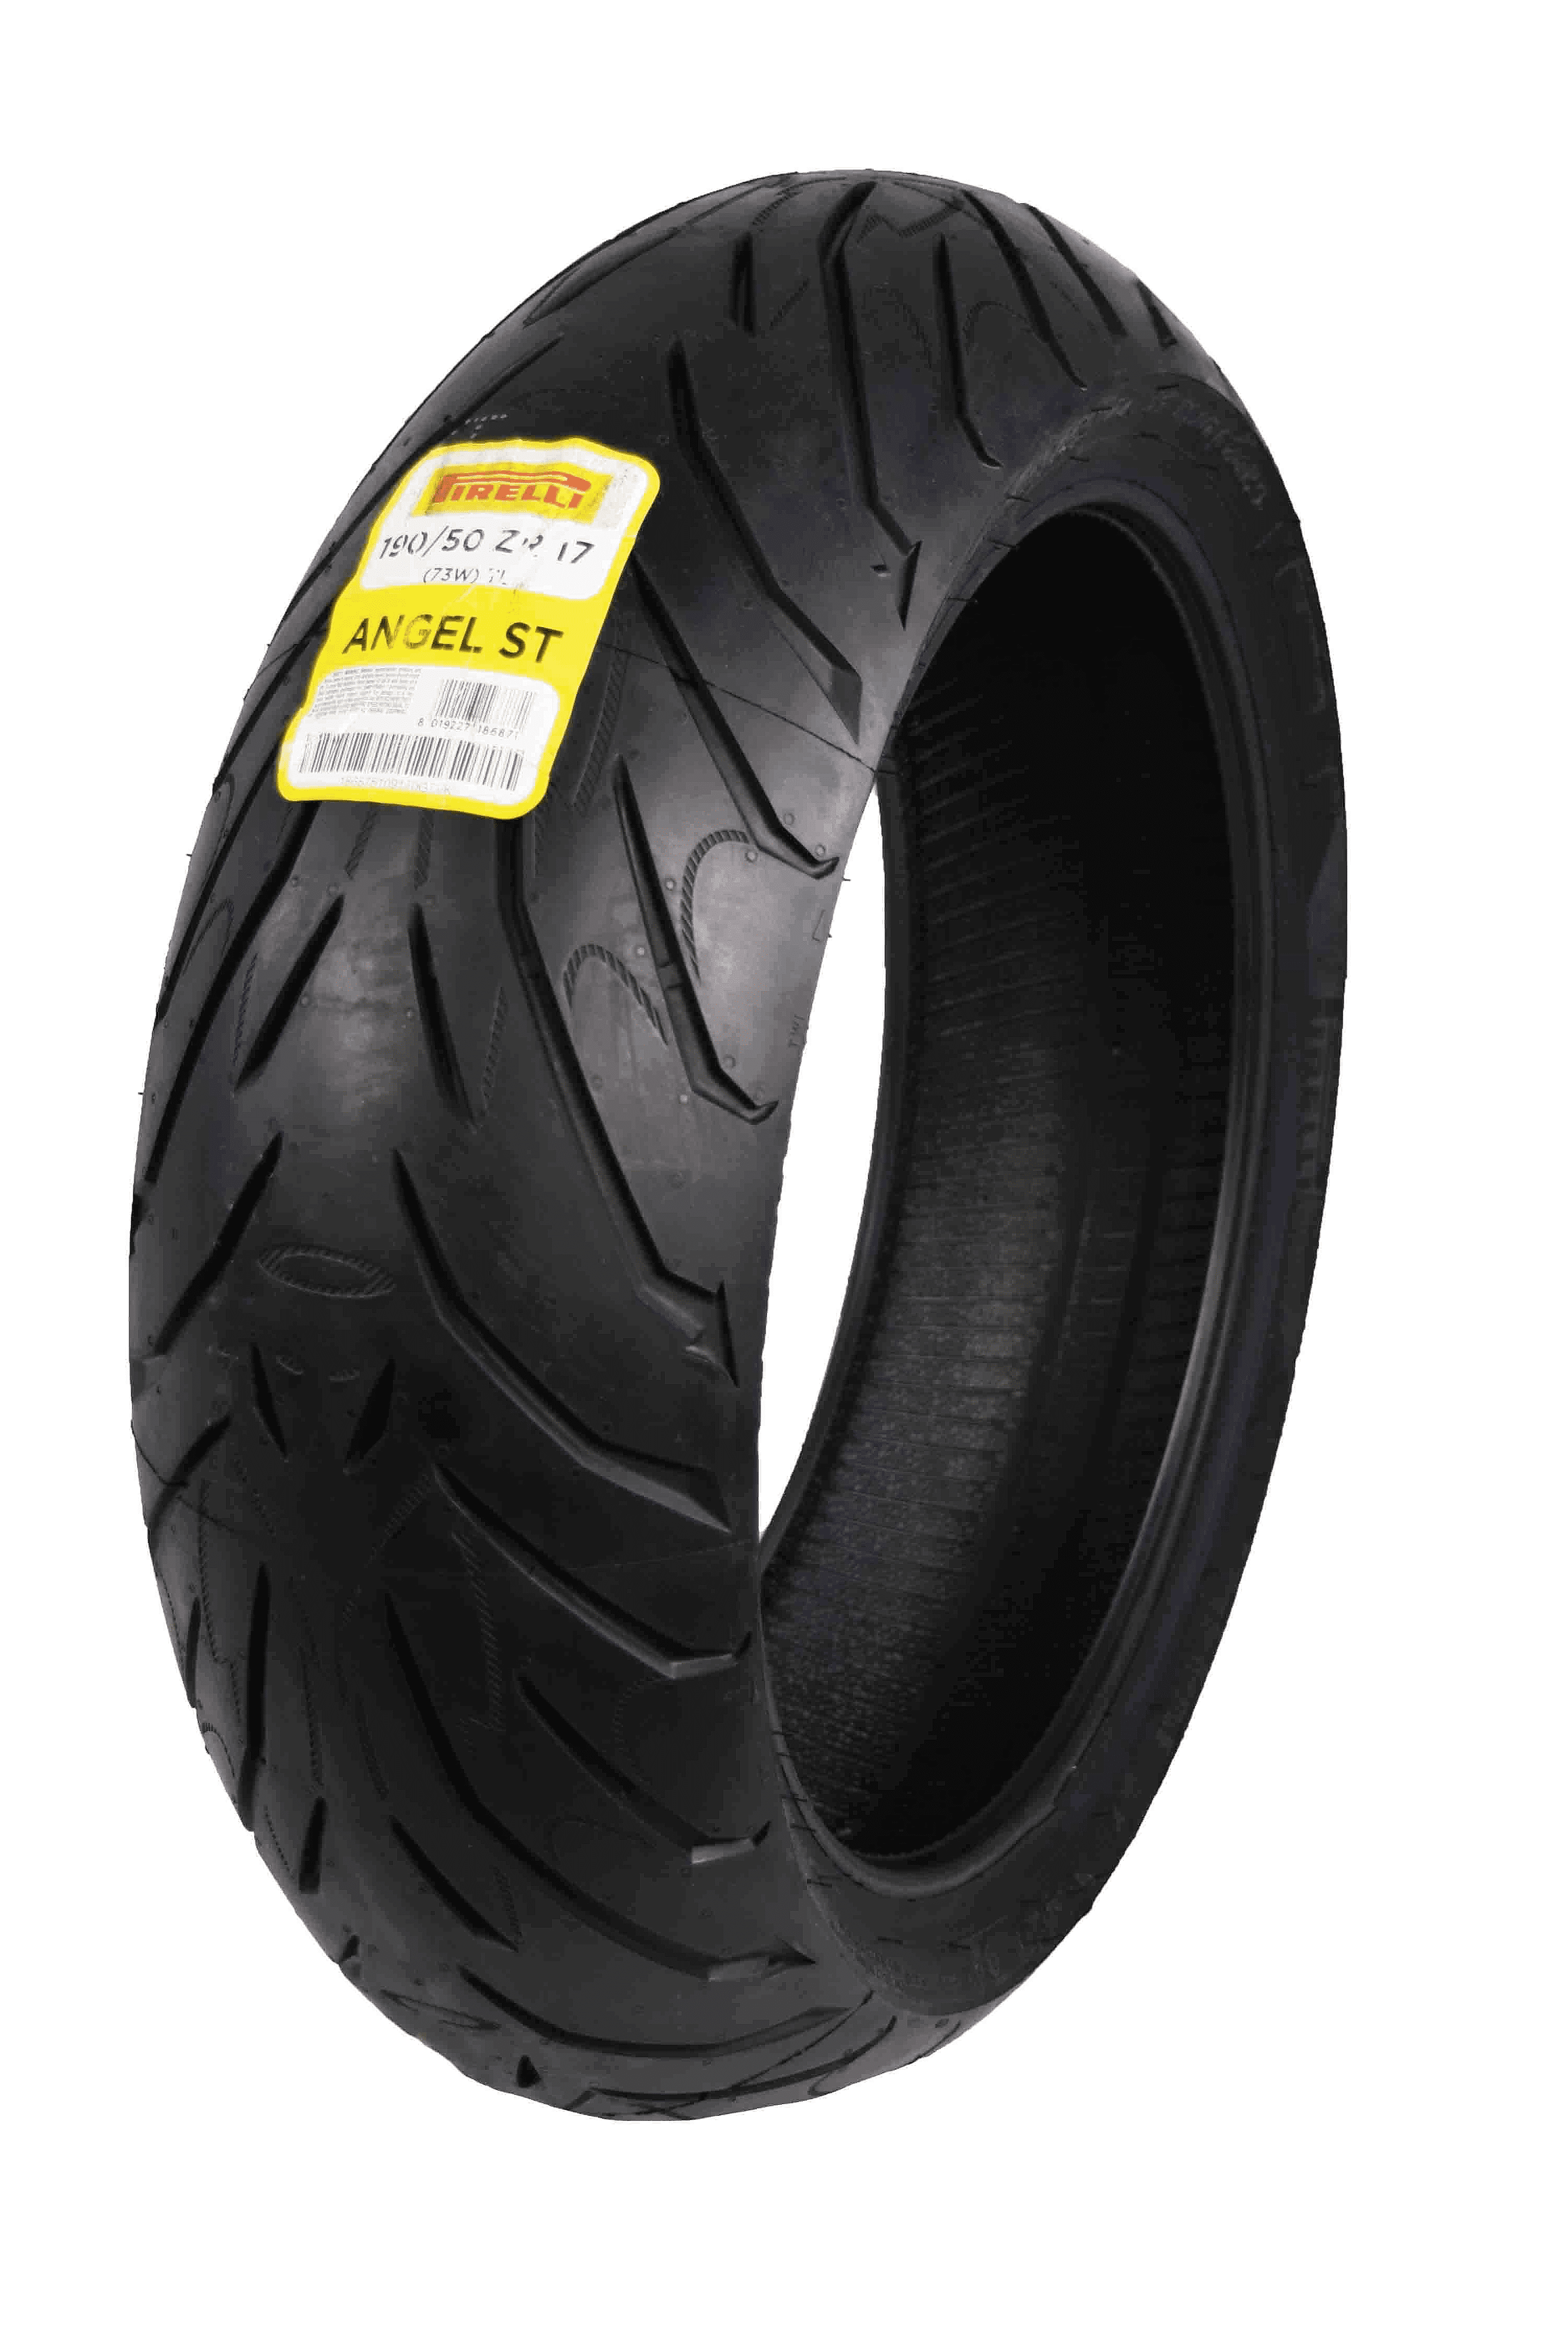 Pirelli Diablo Rosso 3 Rear Motorcycle Tire for Yamaha YZF-R6 1999-2018 180//55ZR-17 73W